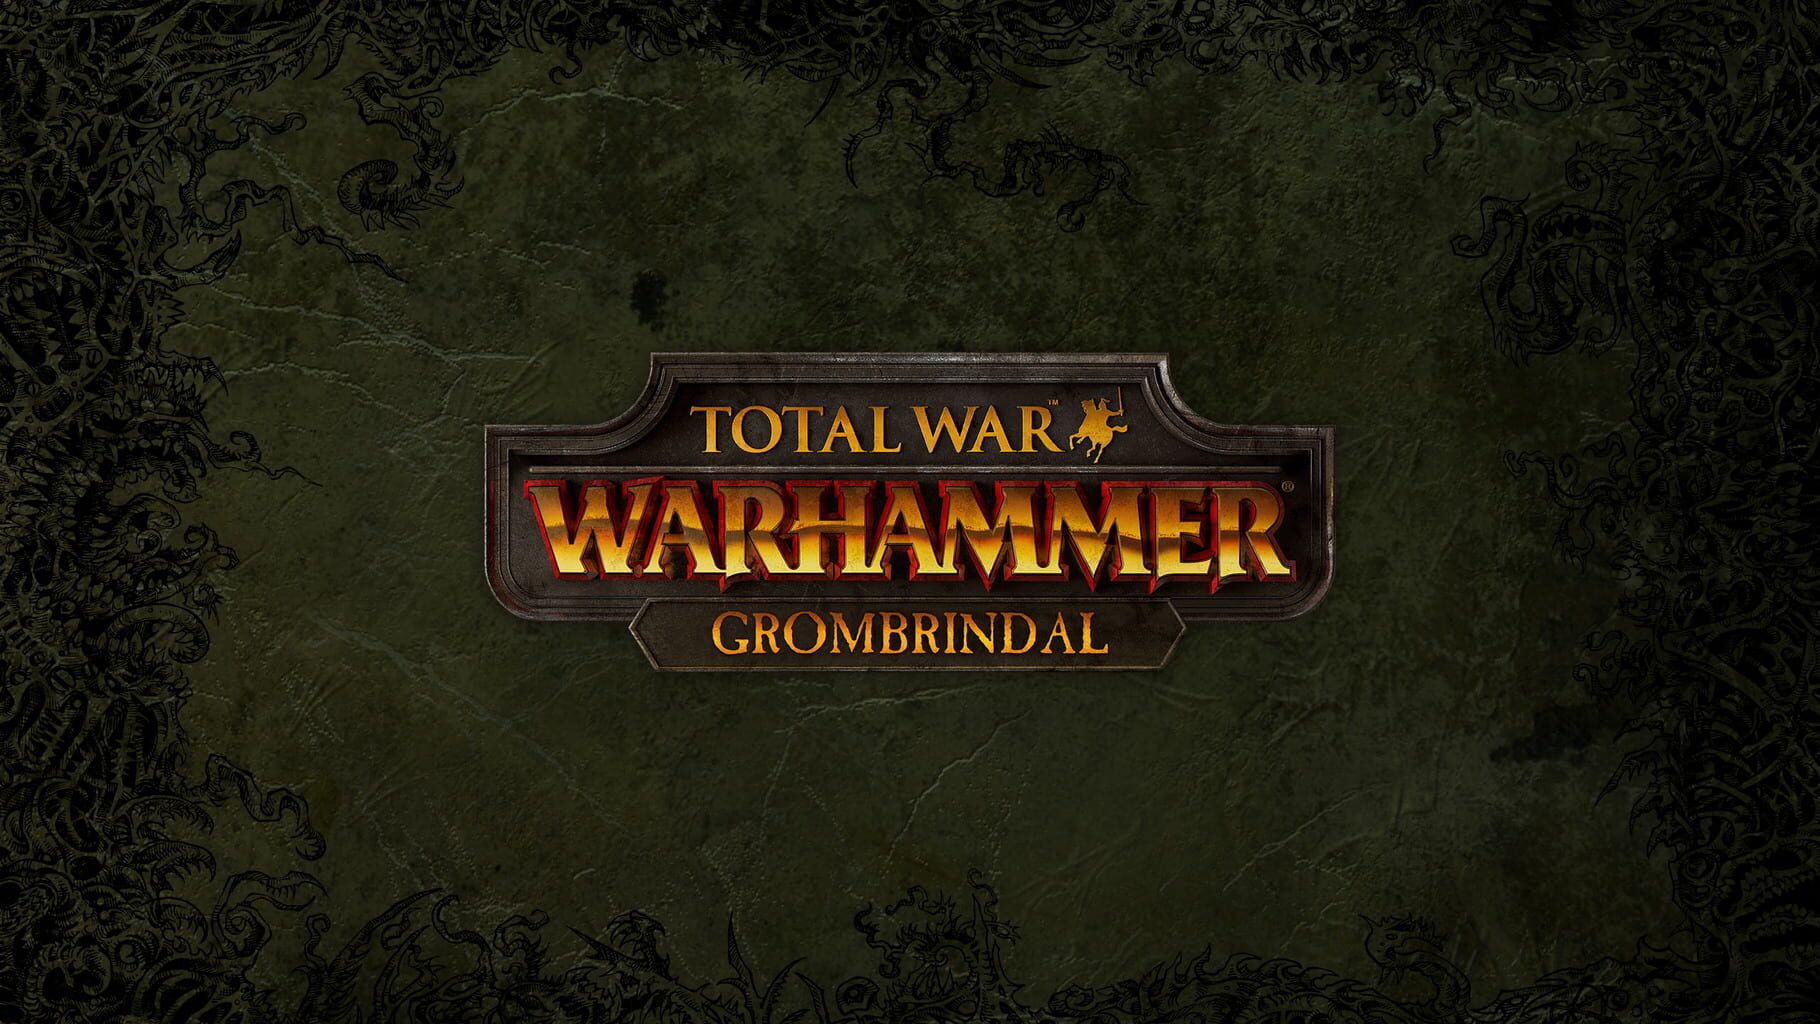 Arte - Total War: Warhammer - Grombrindal the White Dwarf